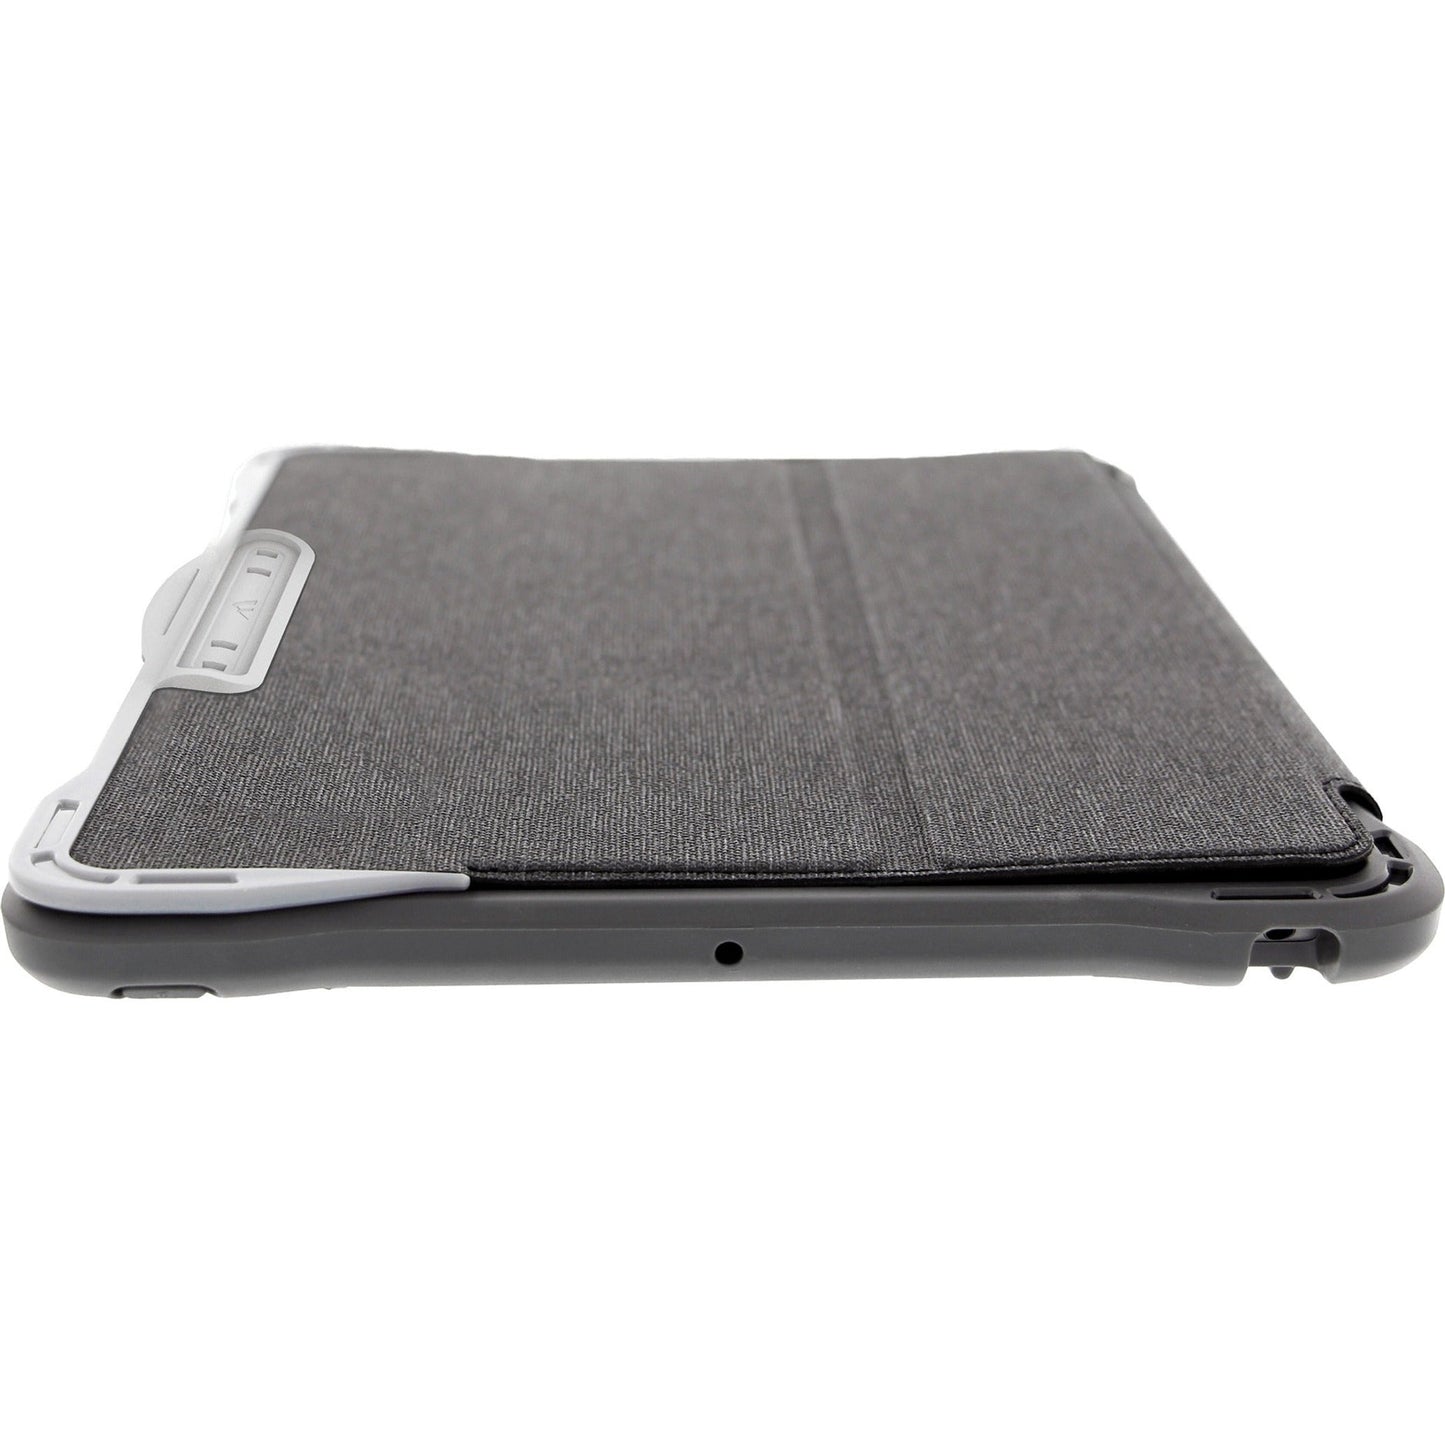 Brenthaven Edge Folio Rugged Carrying Case (Folio) for 10.2" Apple iPad (9th Generation) iPad (7th Generation) iPad (8th Generation) Tablet Stylus Apple Pencil (2nd Generation) - Gray